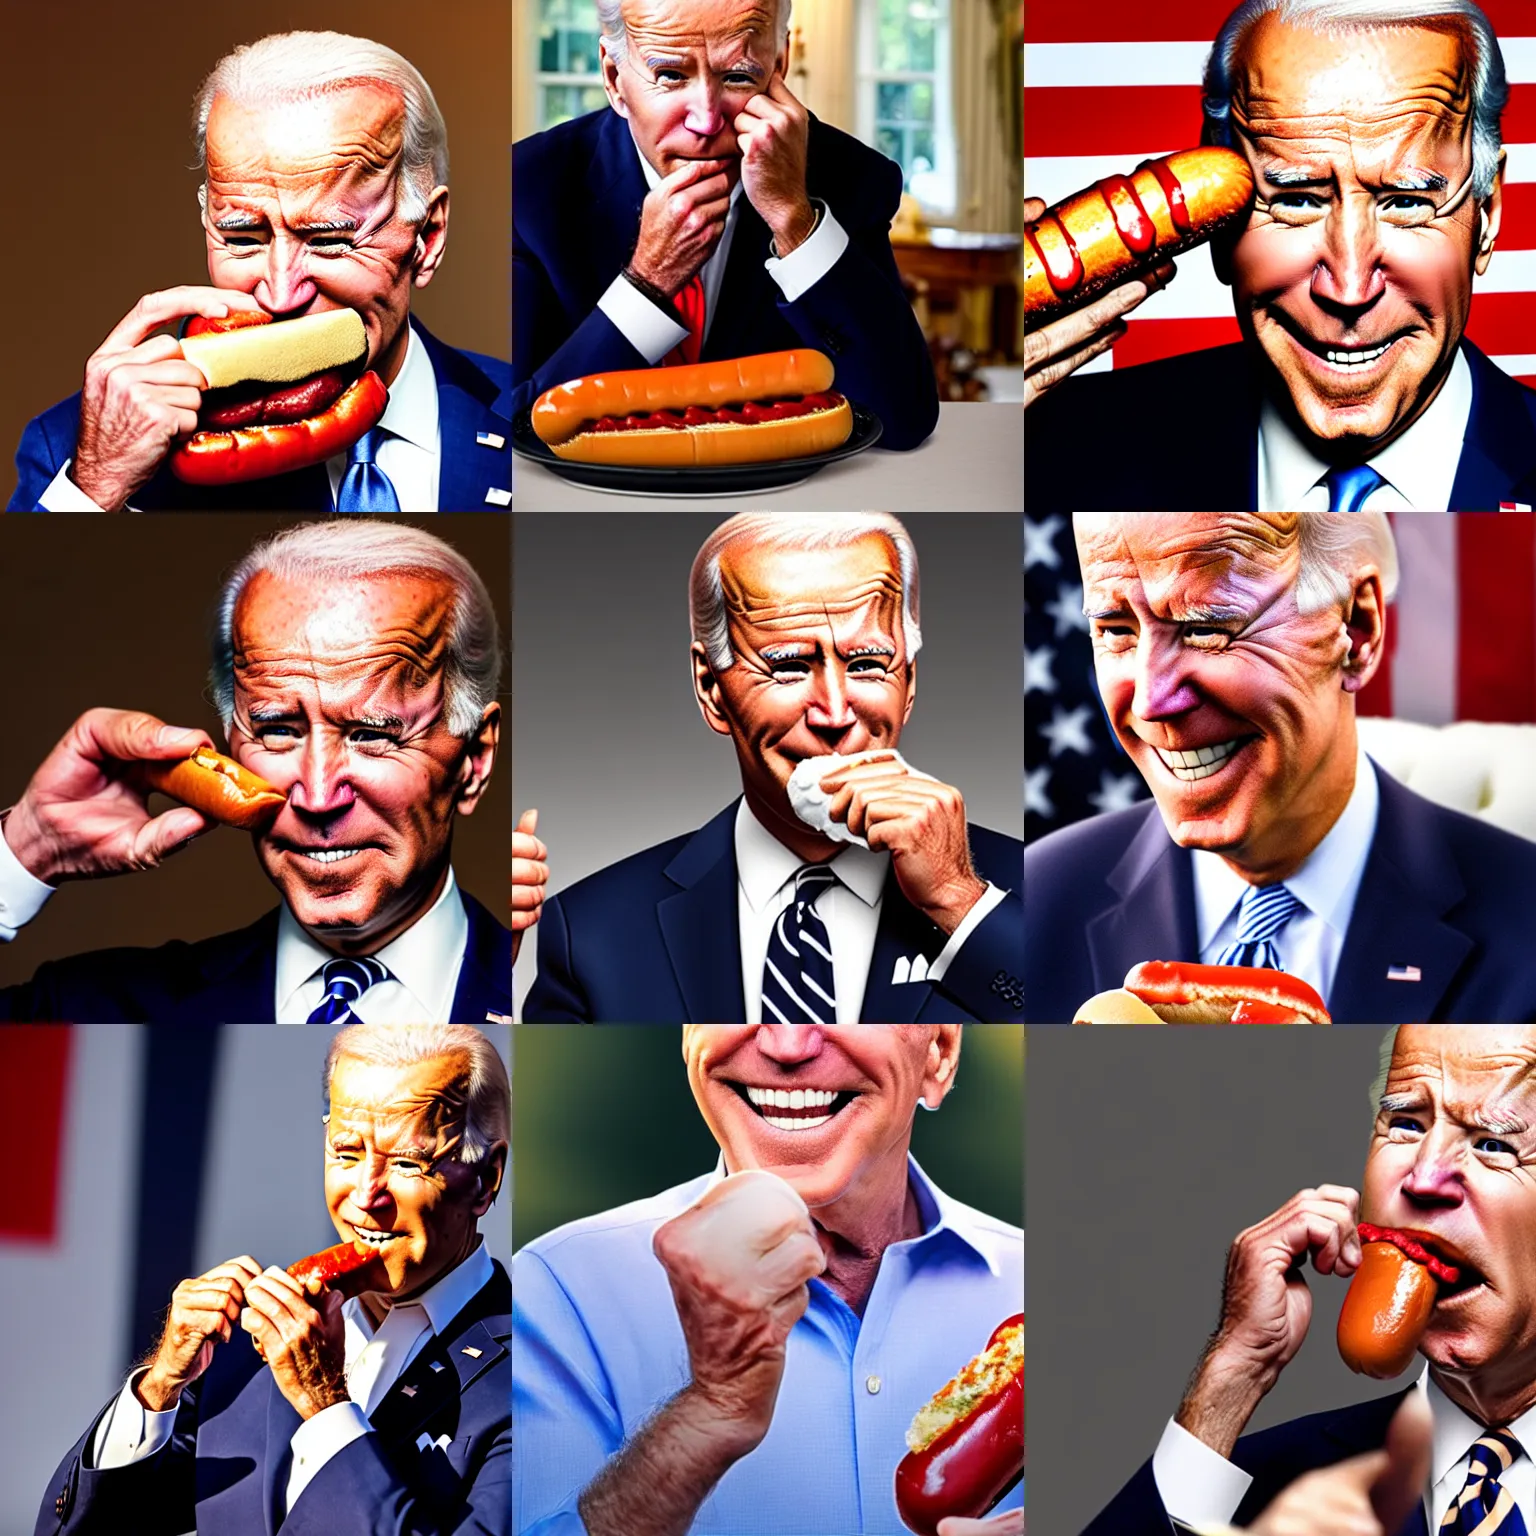 Prompt: joe biden rubbing a hotdog against his face, realistic, 8 k, incredible lighting, award winning.